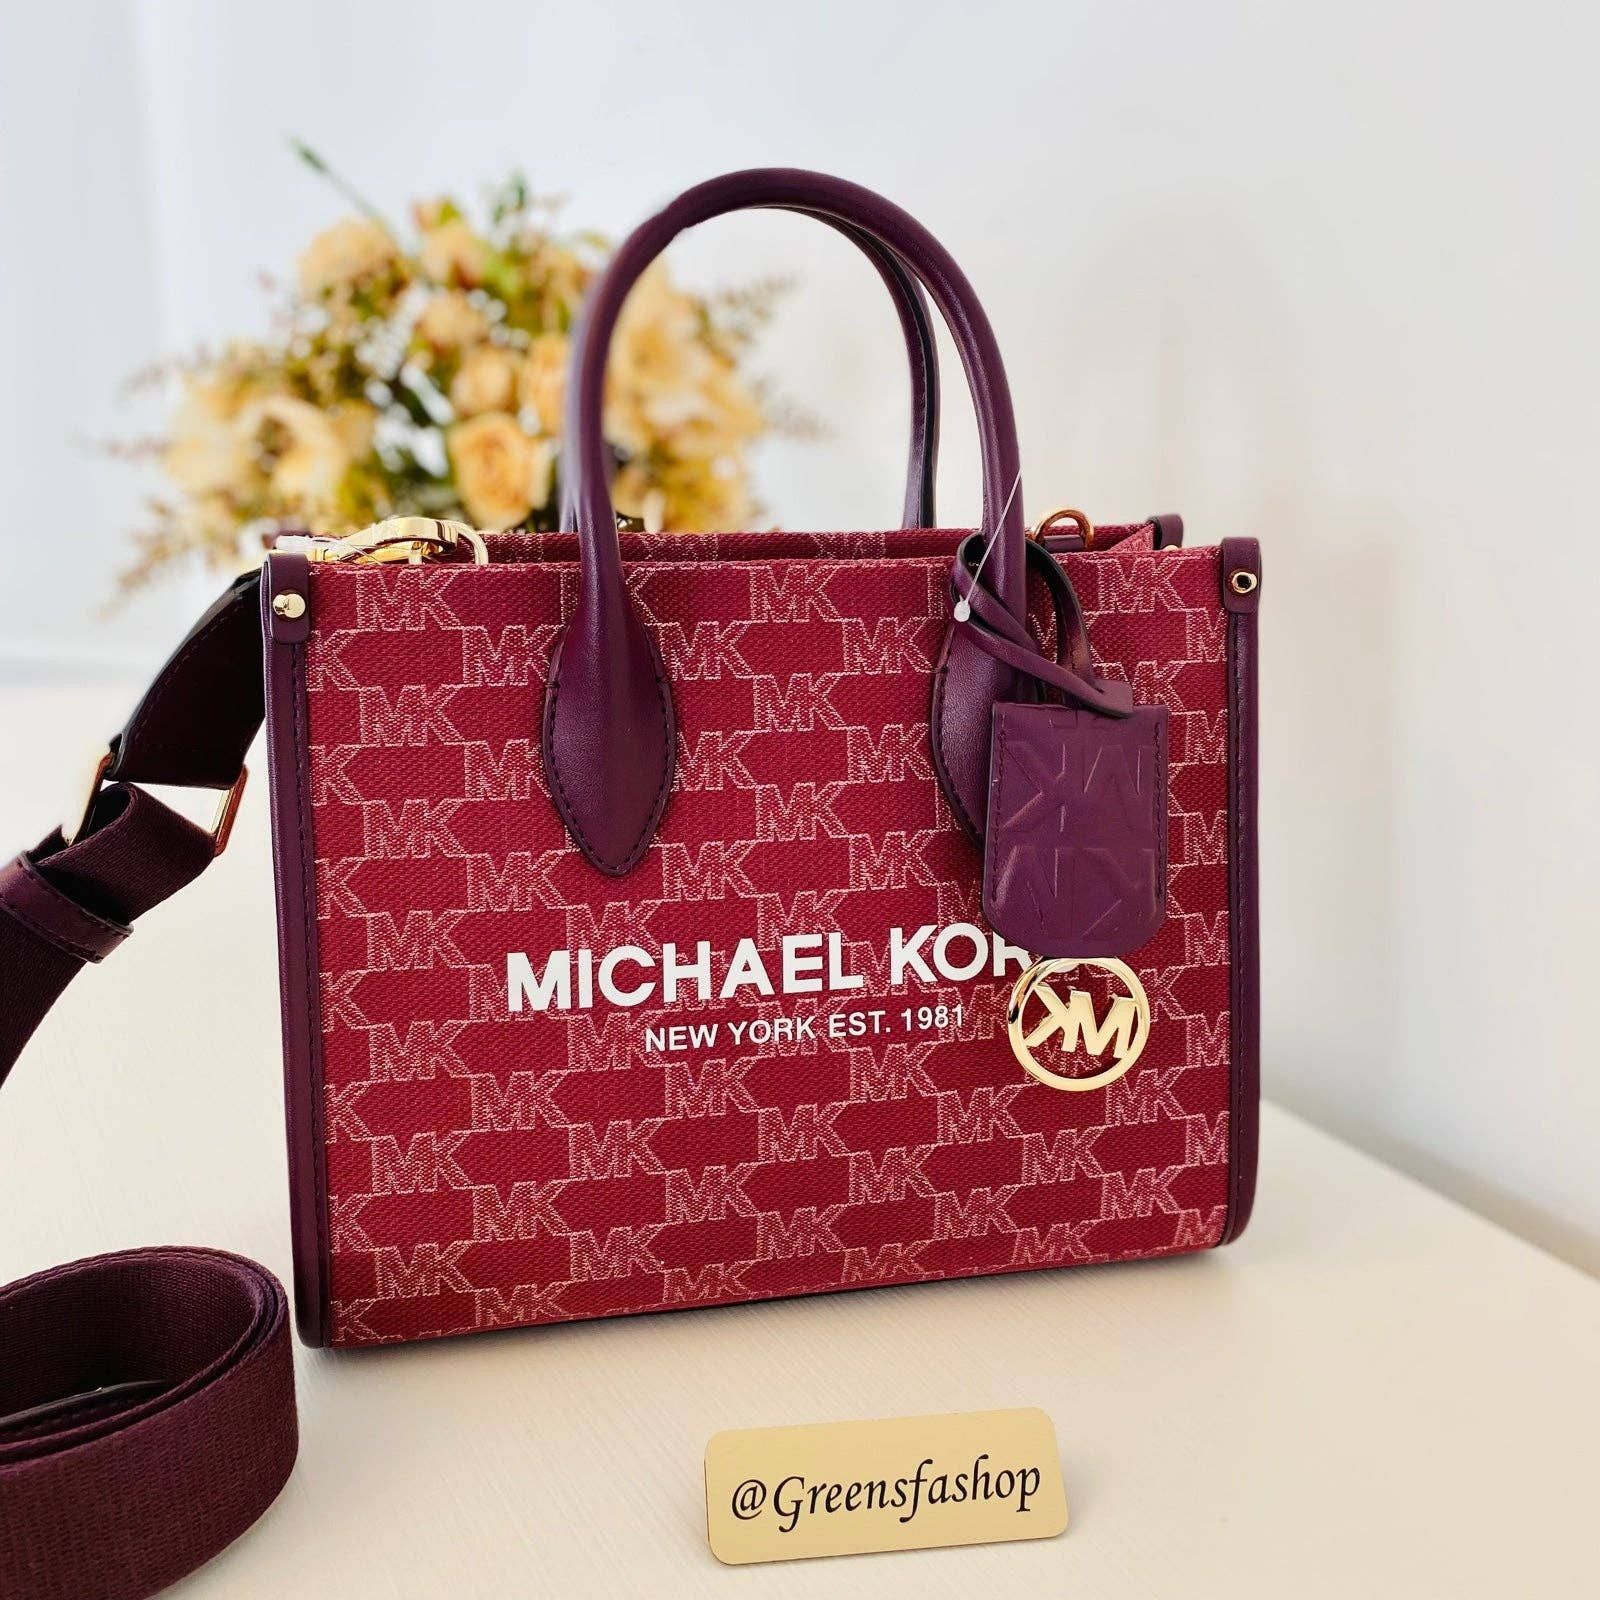  MICHAEL Michael Kors Womens Selma Leather Studded Crossbody  Handbag Pink Medium : Everything Else